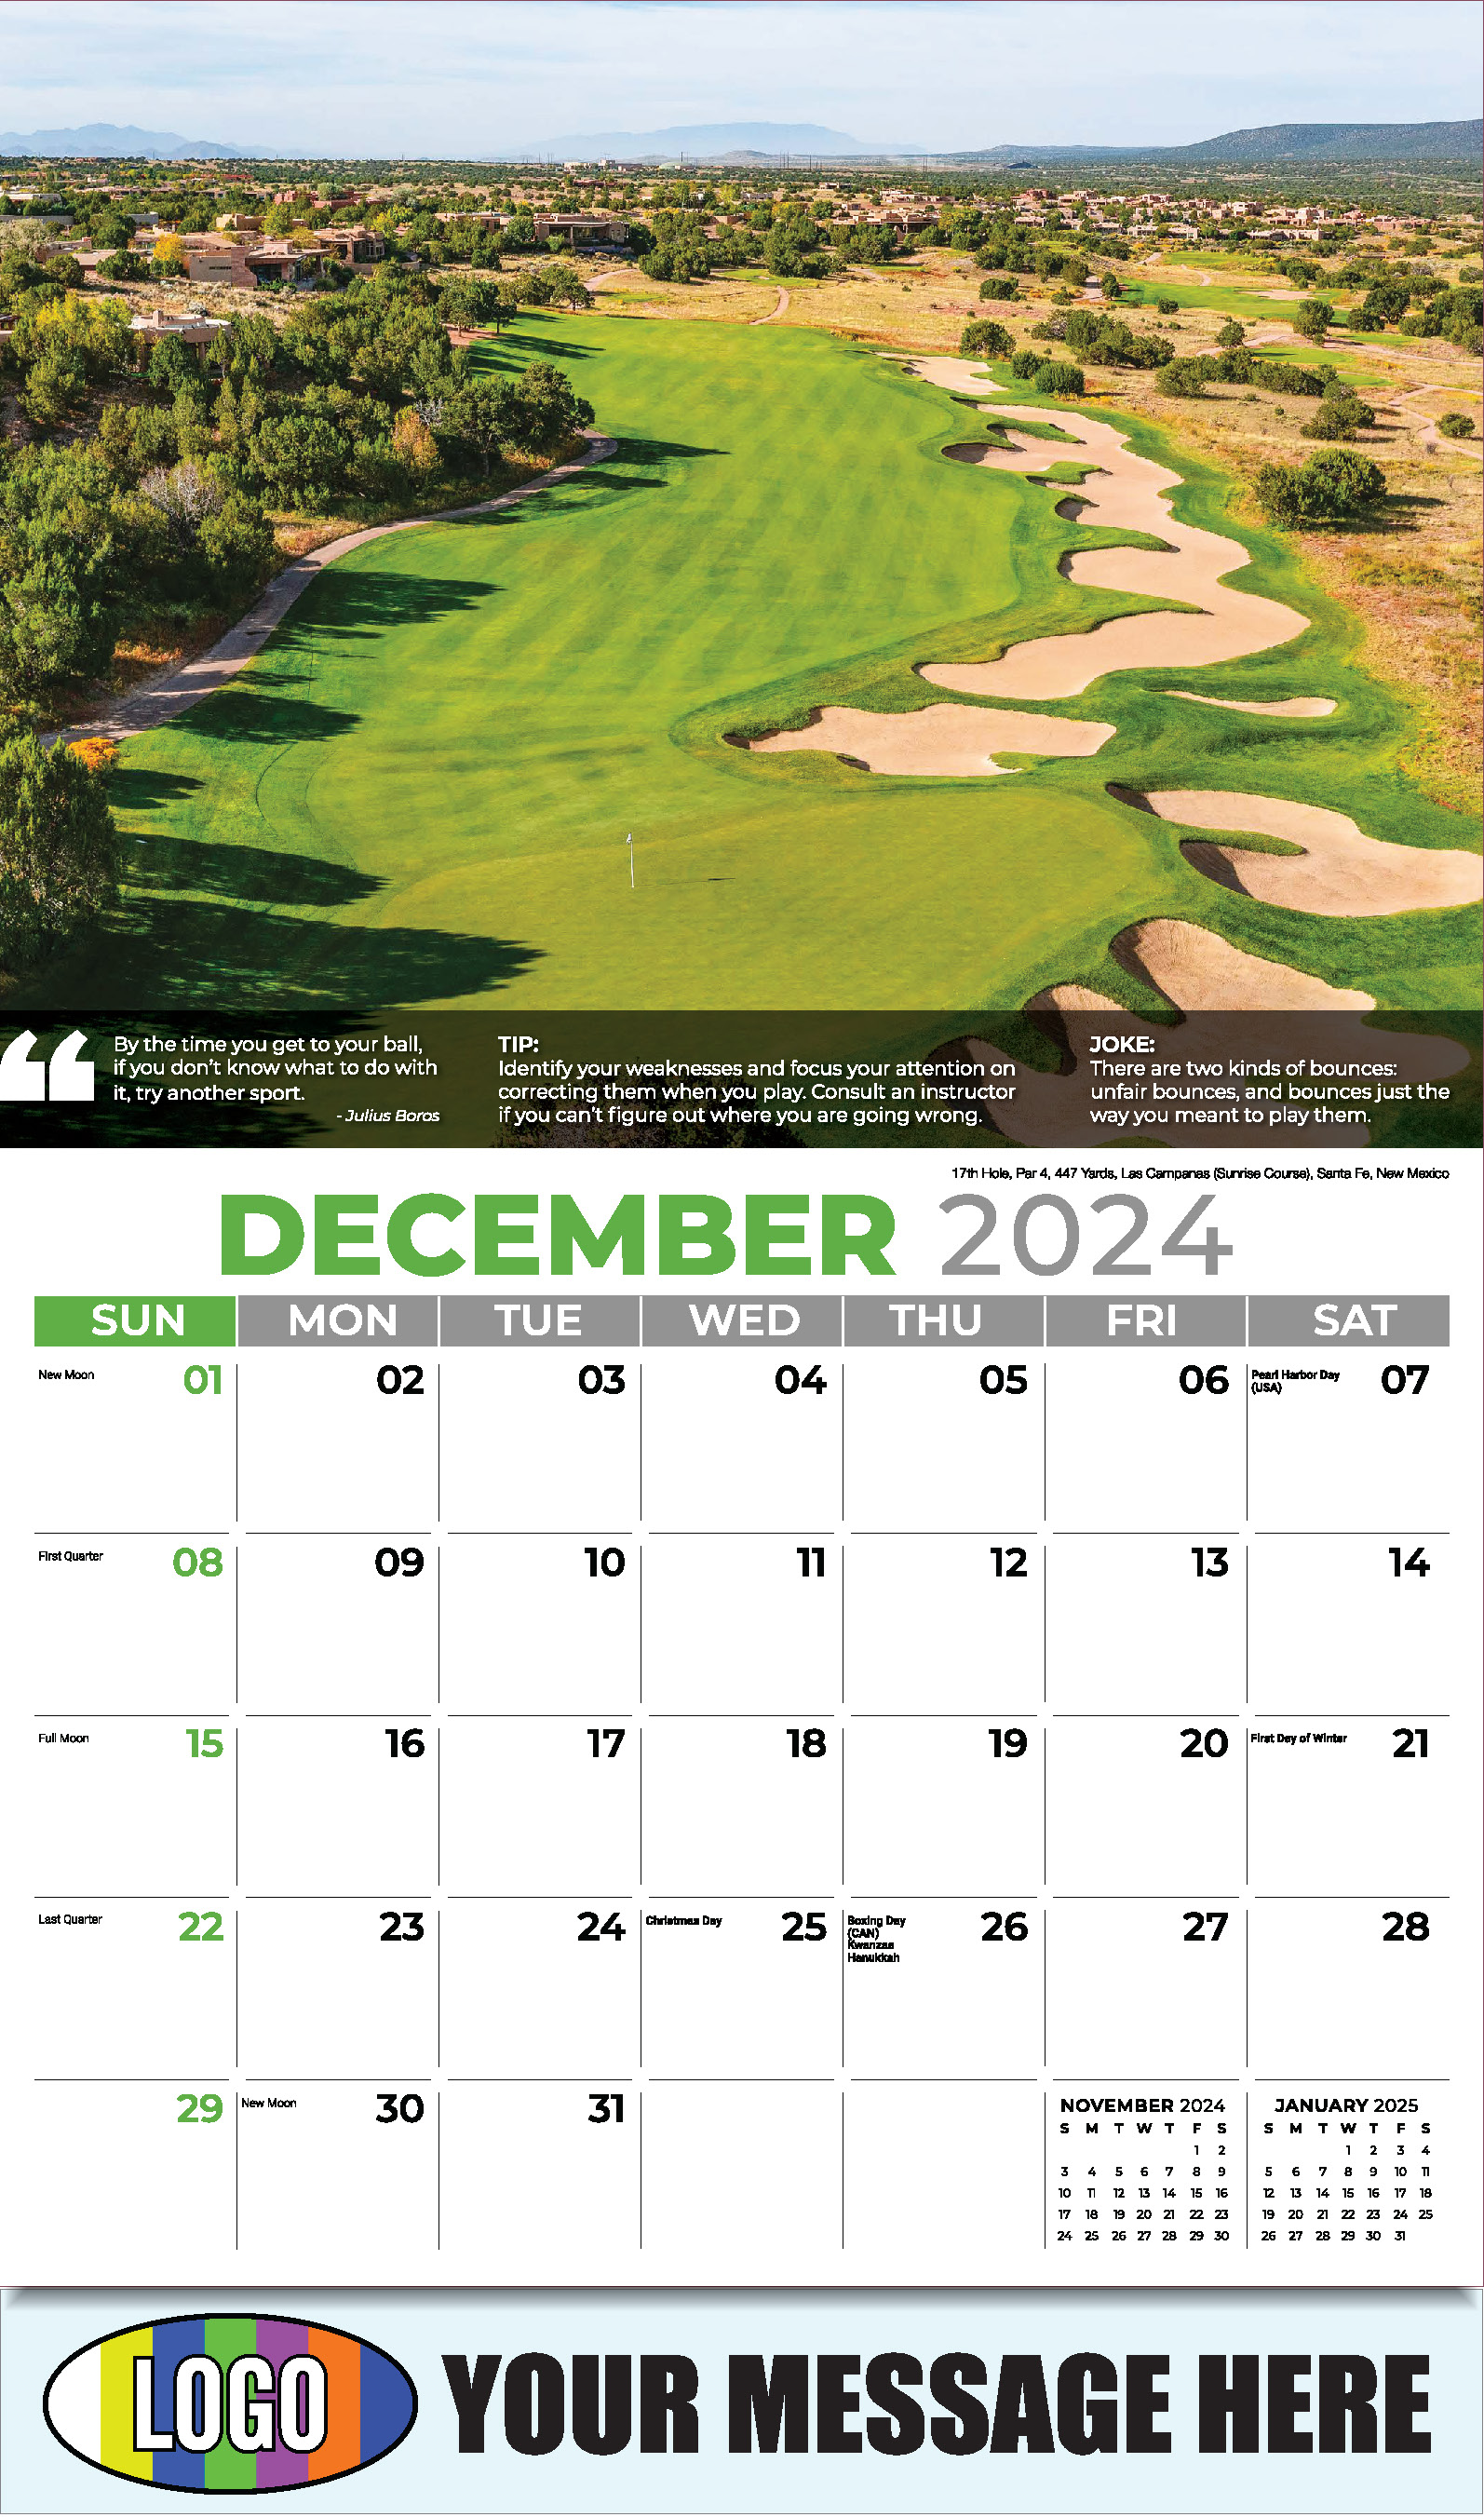 Golf Tips 2025 Business Promo Calendar - December_a